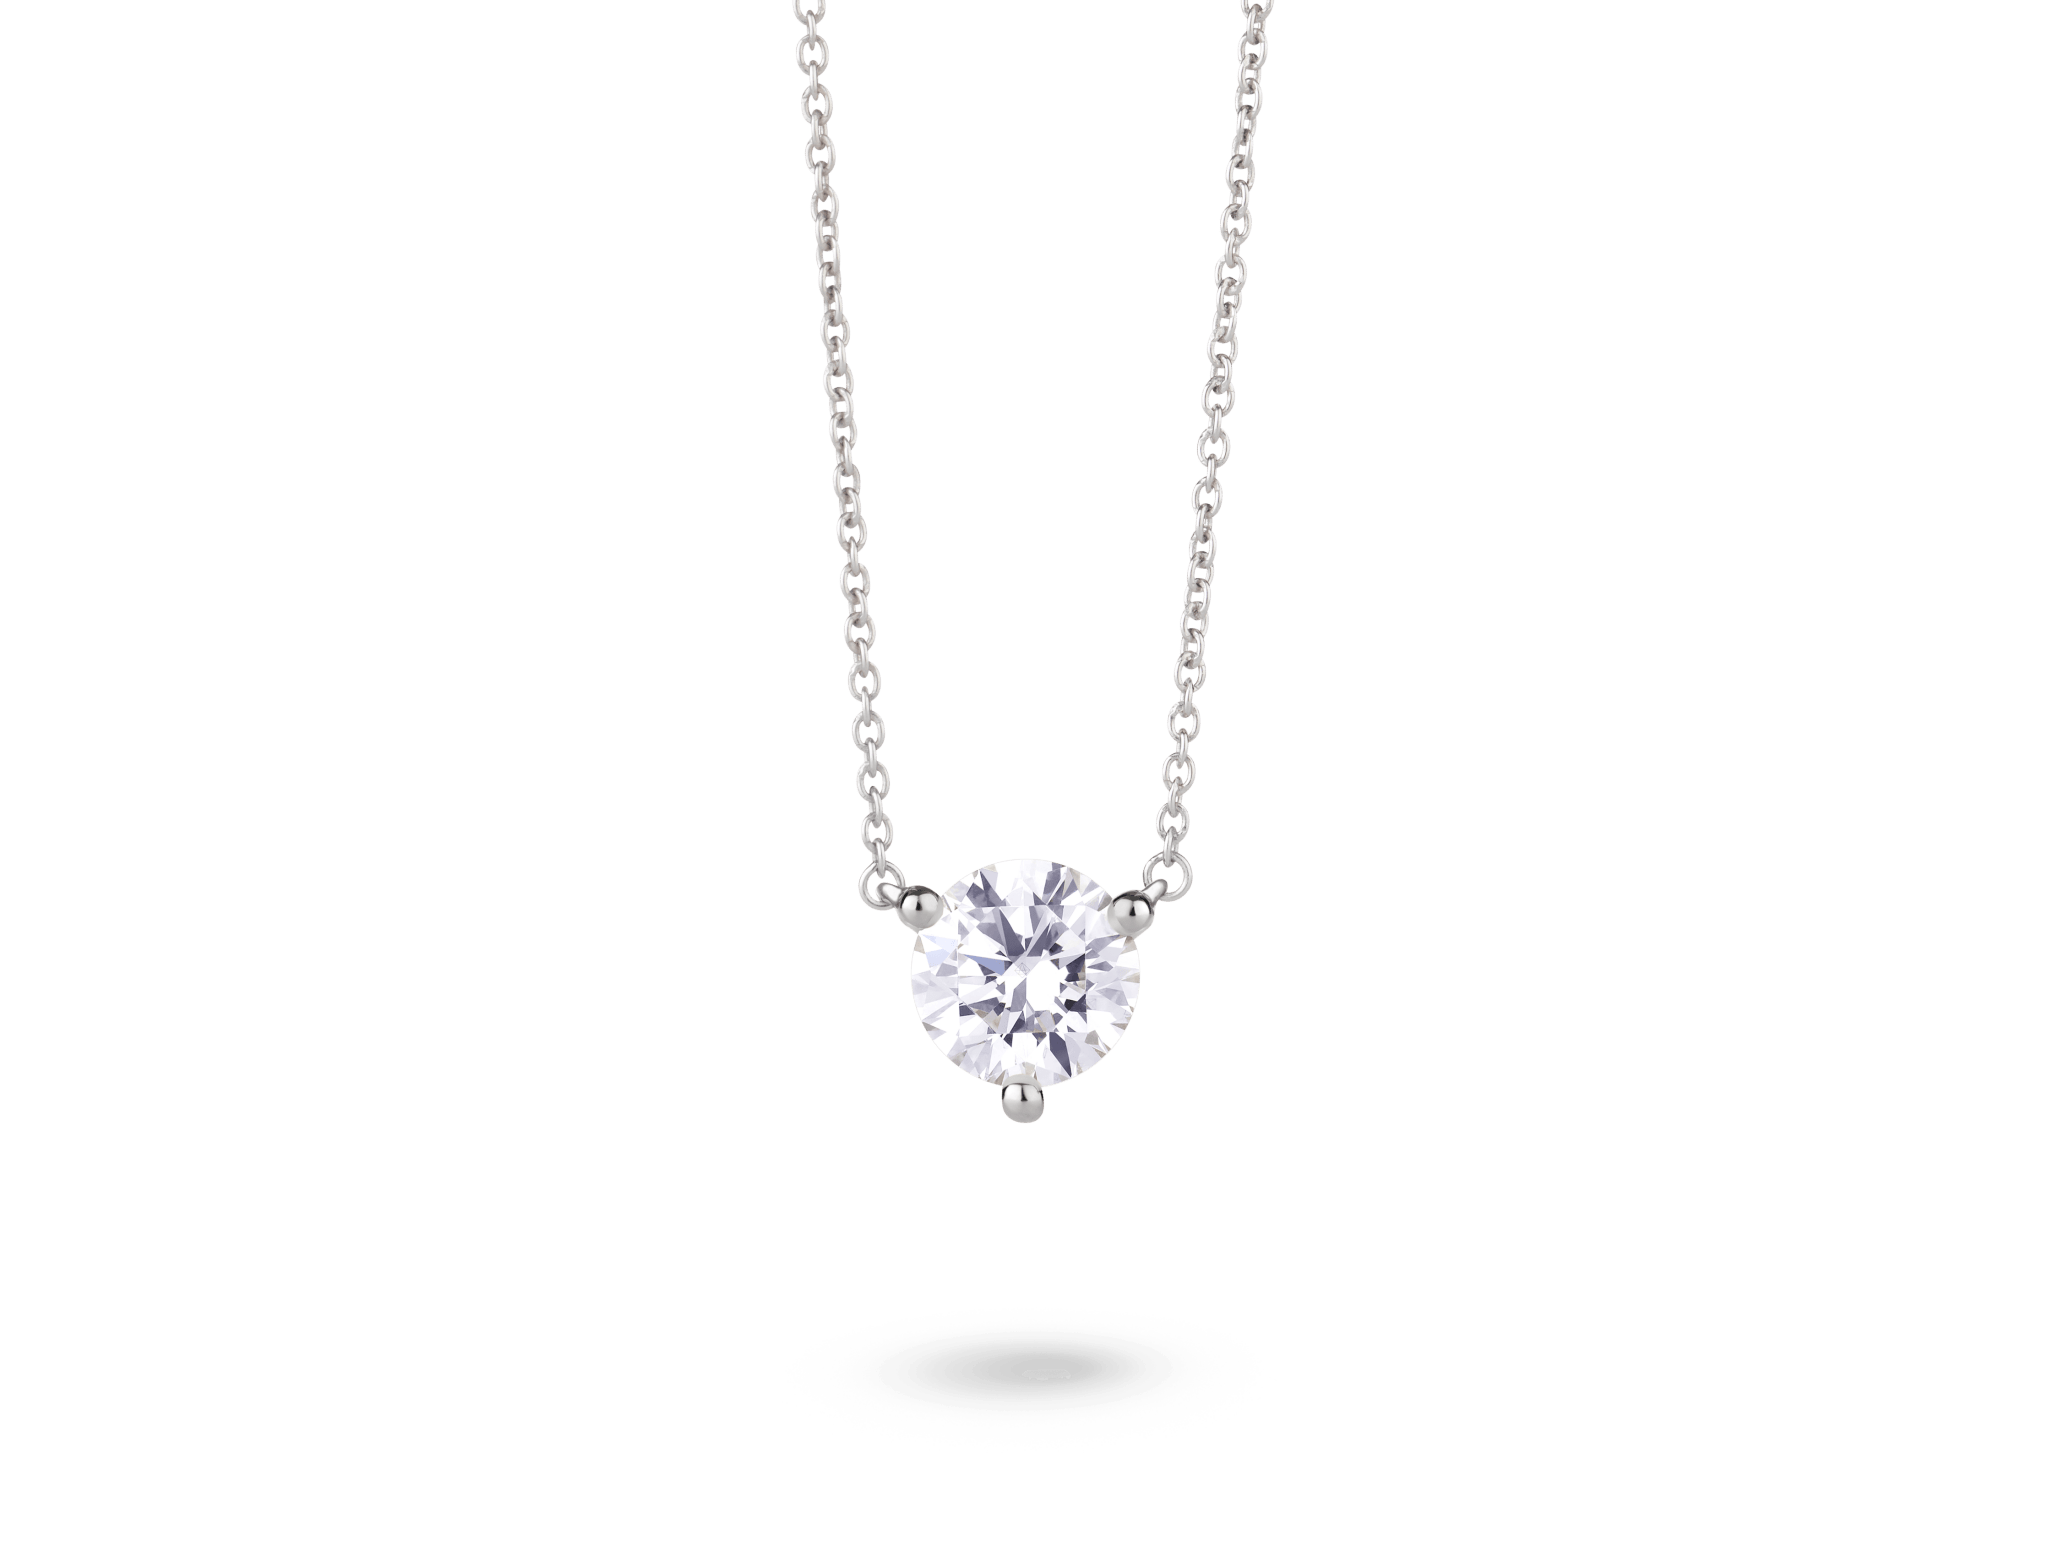 25 Beautiful Diamond Necklace Designs - New Collection | Diamond necklace  designs, Diamond pendants designs, Real diamond necklace